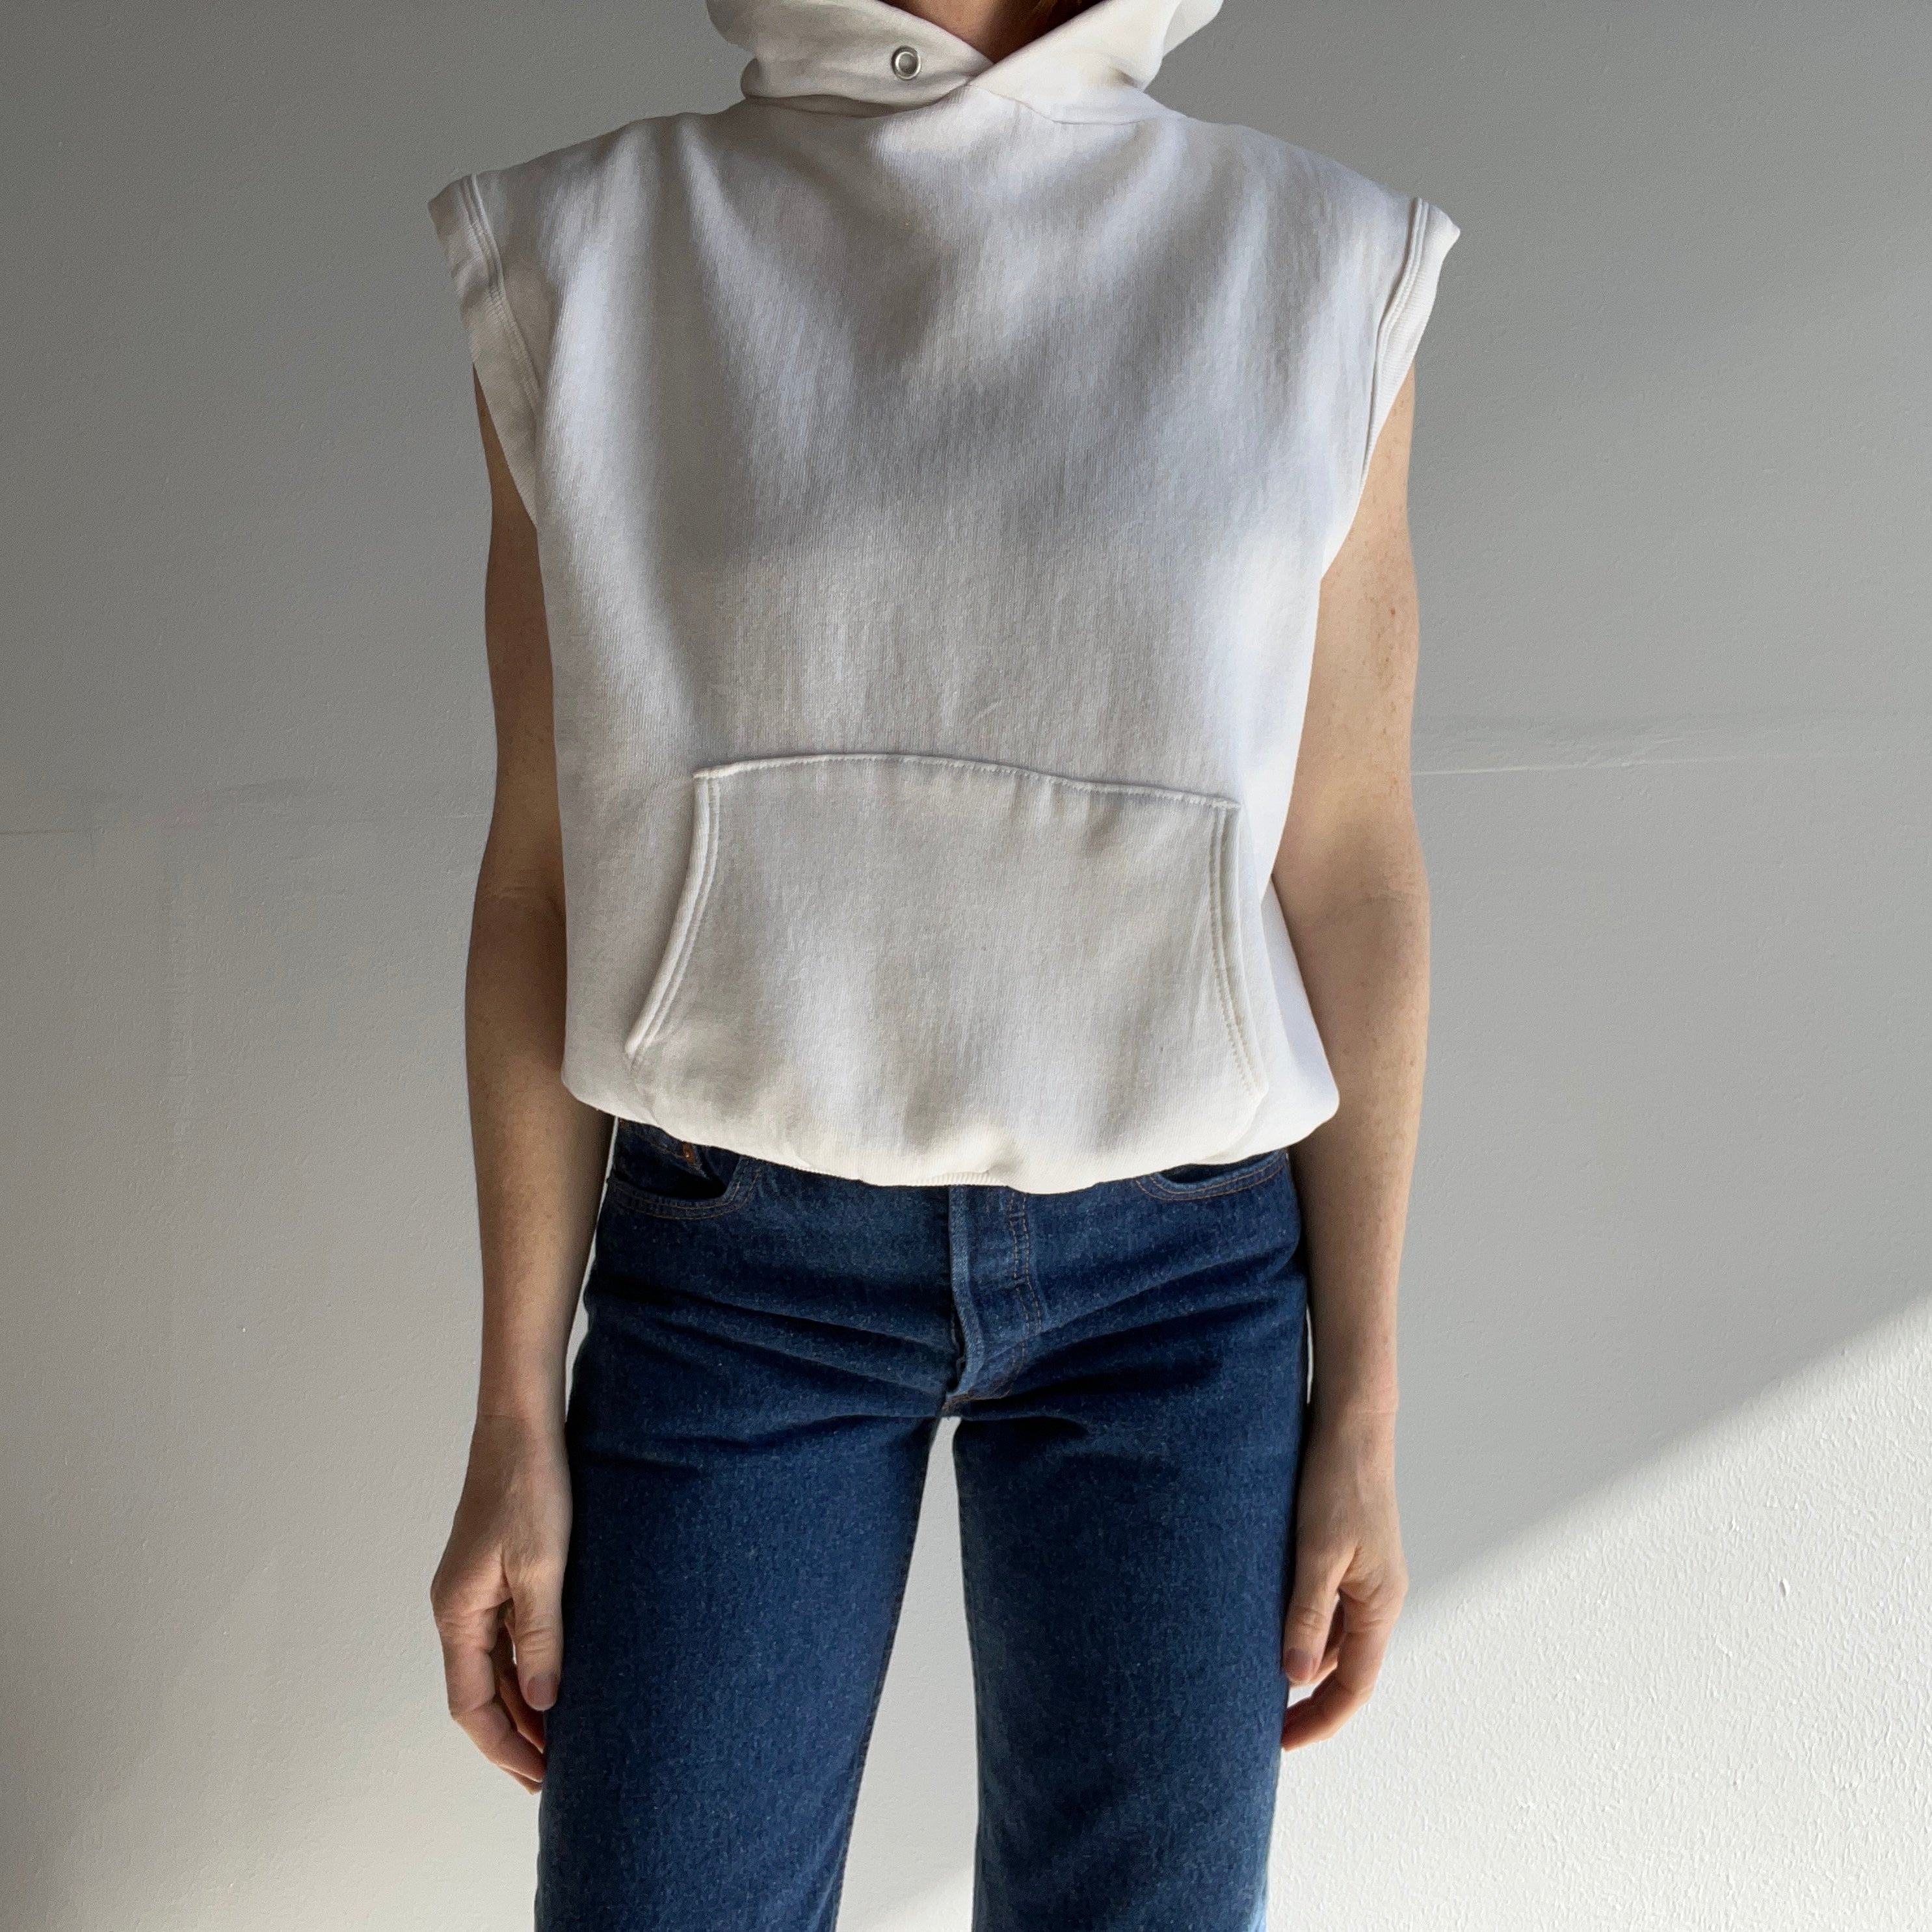 1980s Blank White Hoodie Warm Up Sweatshirt Vest